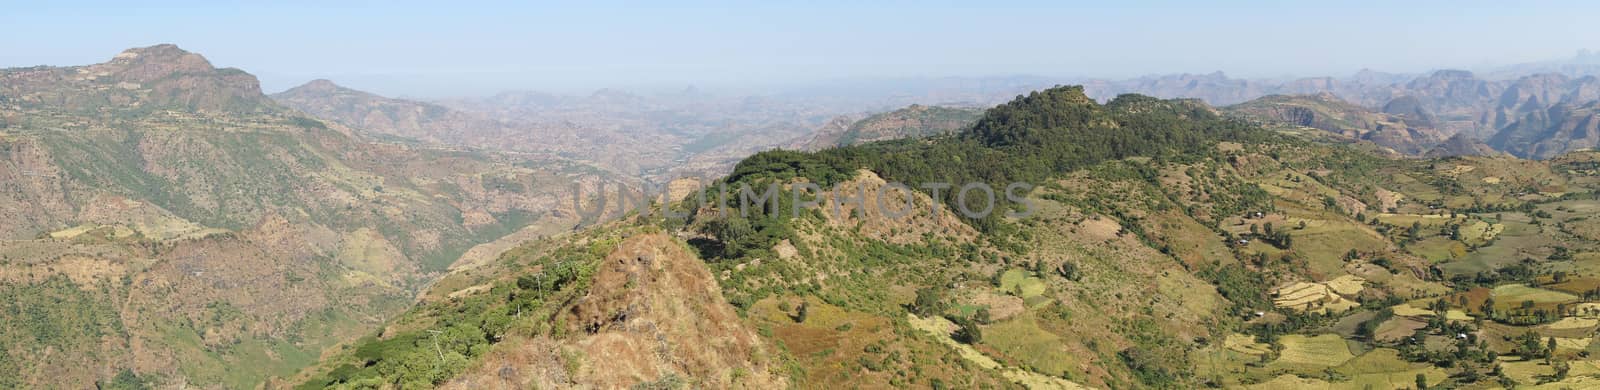 Landscape around the Wolkefit Pass, Ethiopia, Africa